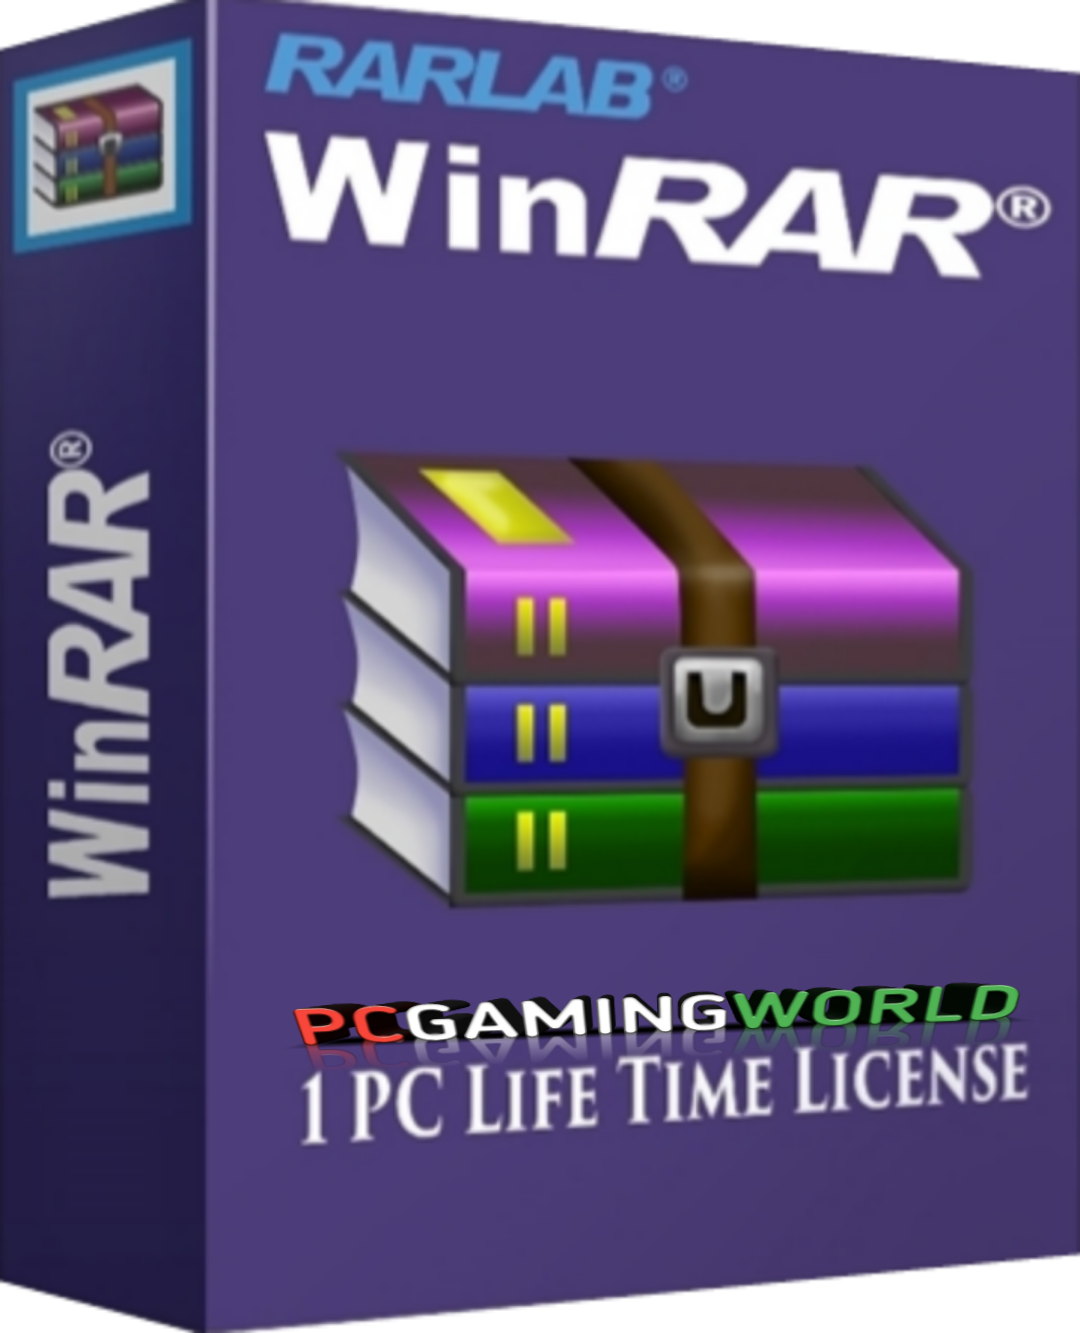 winrar for windows 10 64 bit free download softonic